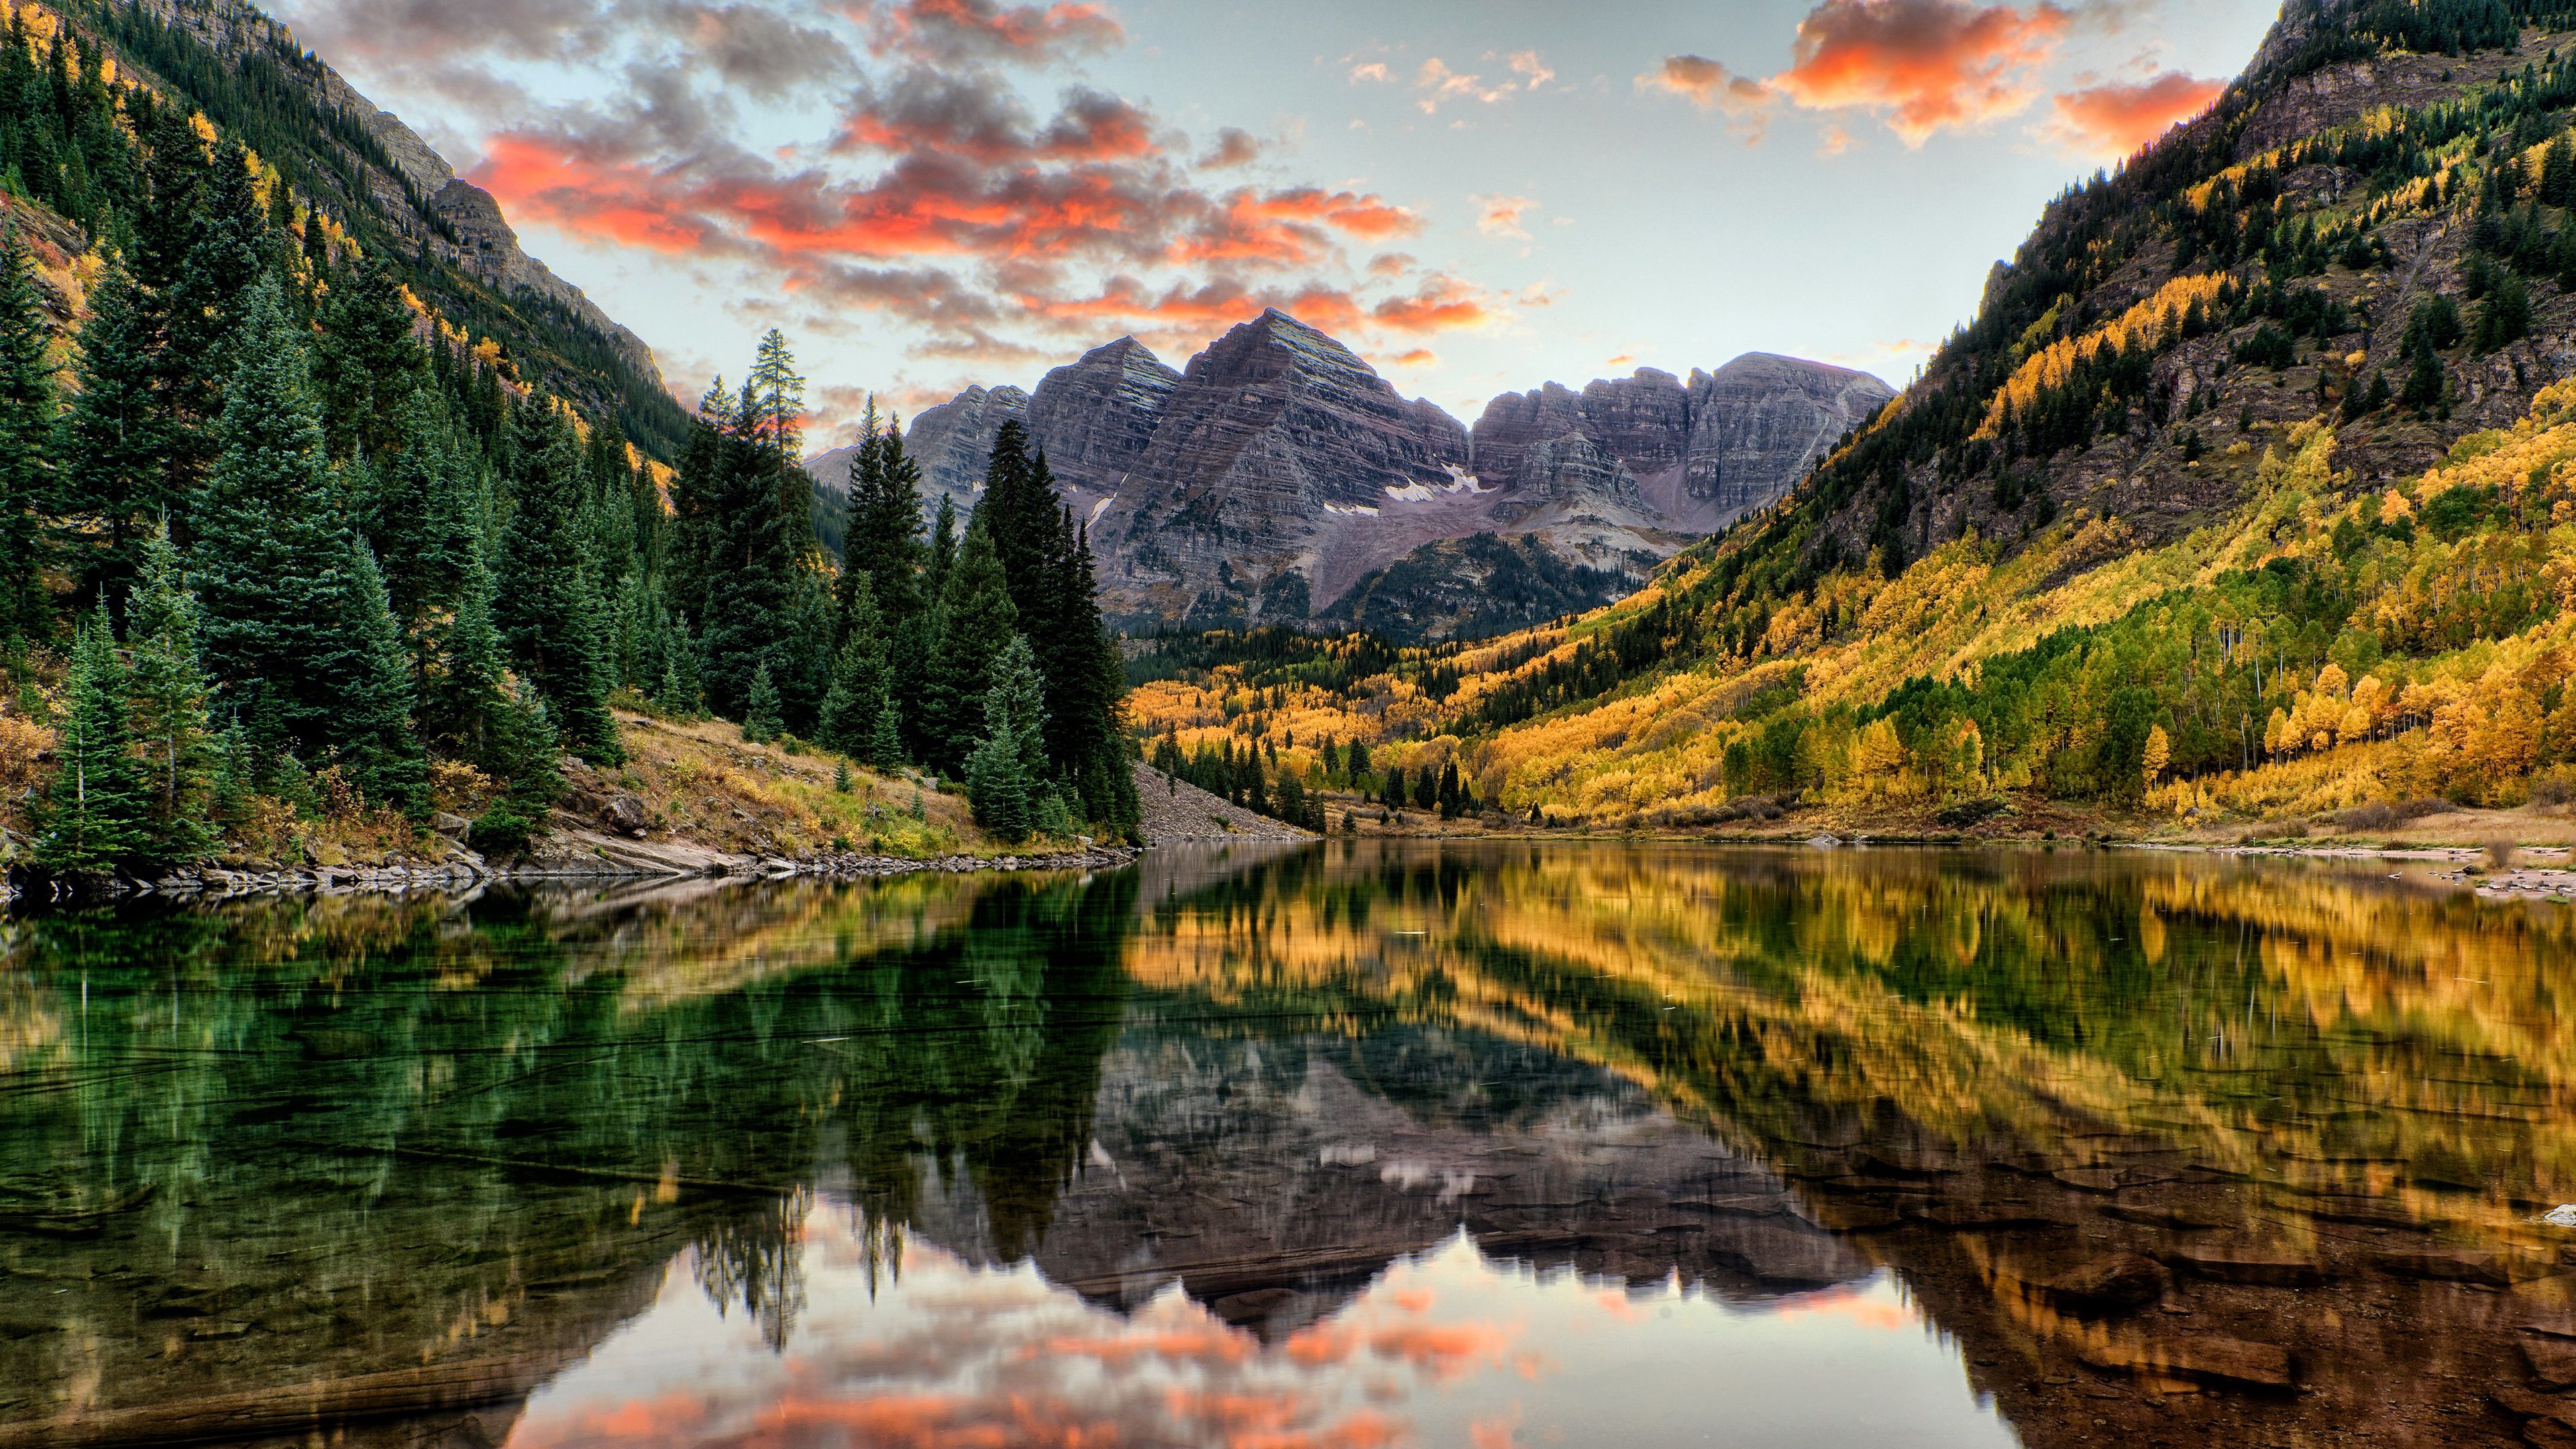 Wallpaper Maroon Bells, mountains, trees, lake, autumn, Colorado, USA 3840x2160 UHD 4K Picture, Image